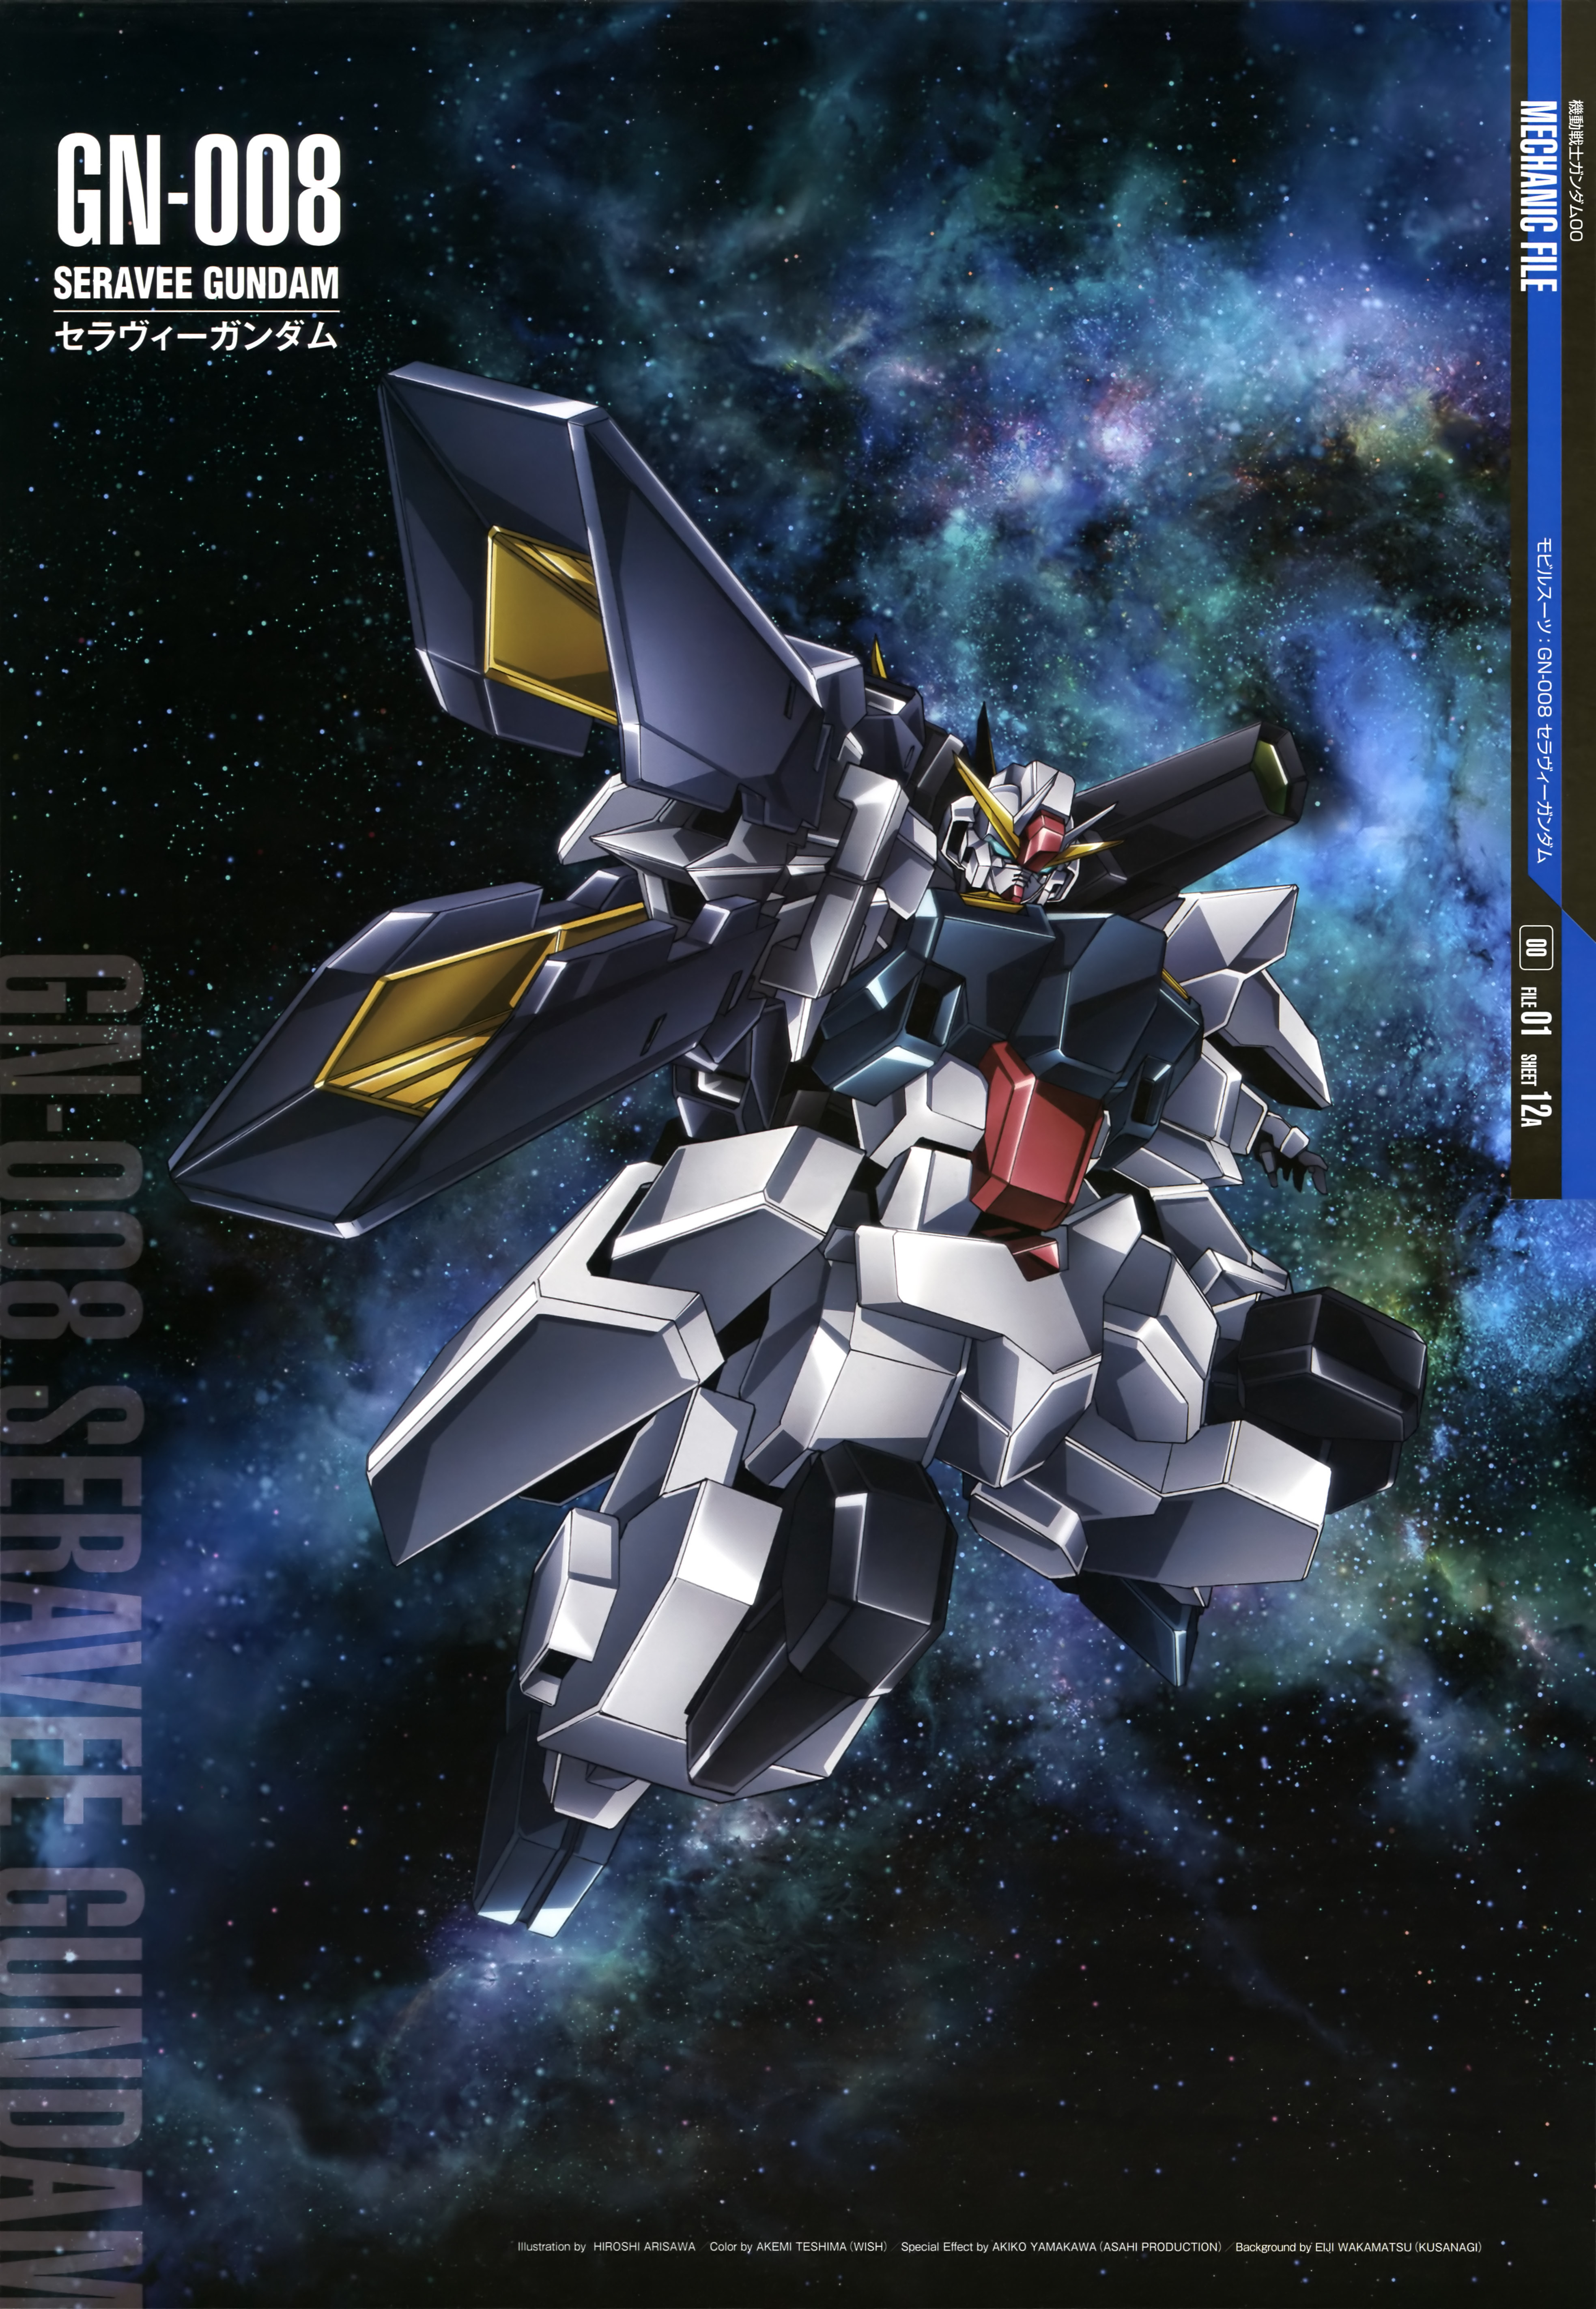 Anime 3934x5692 Seravee Gundam anime mechs Gundam Mobile Suit Gundam 00 Super Robot Taisen artwork digital art